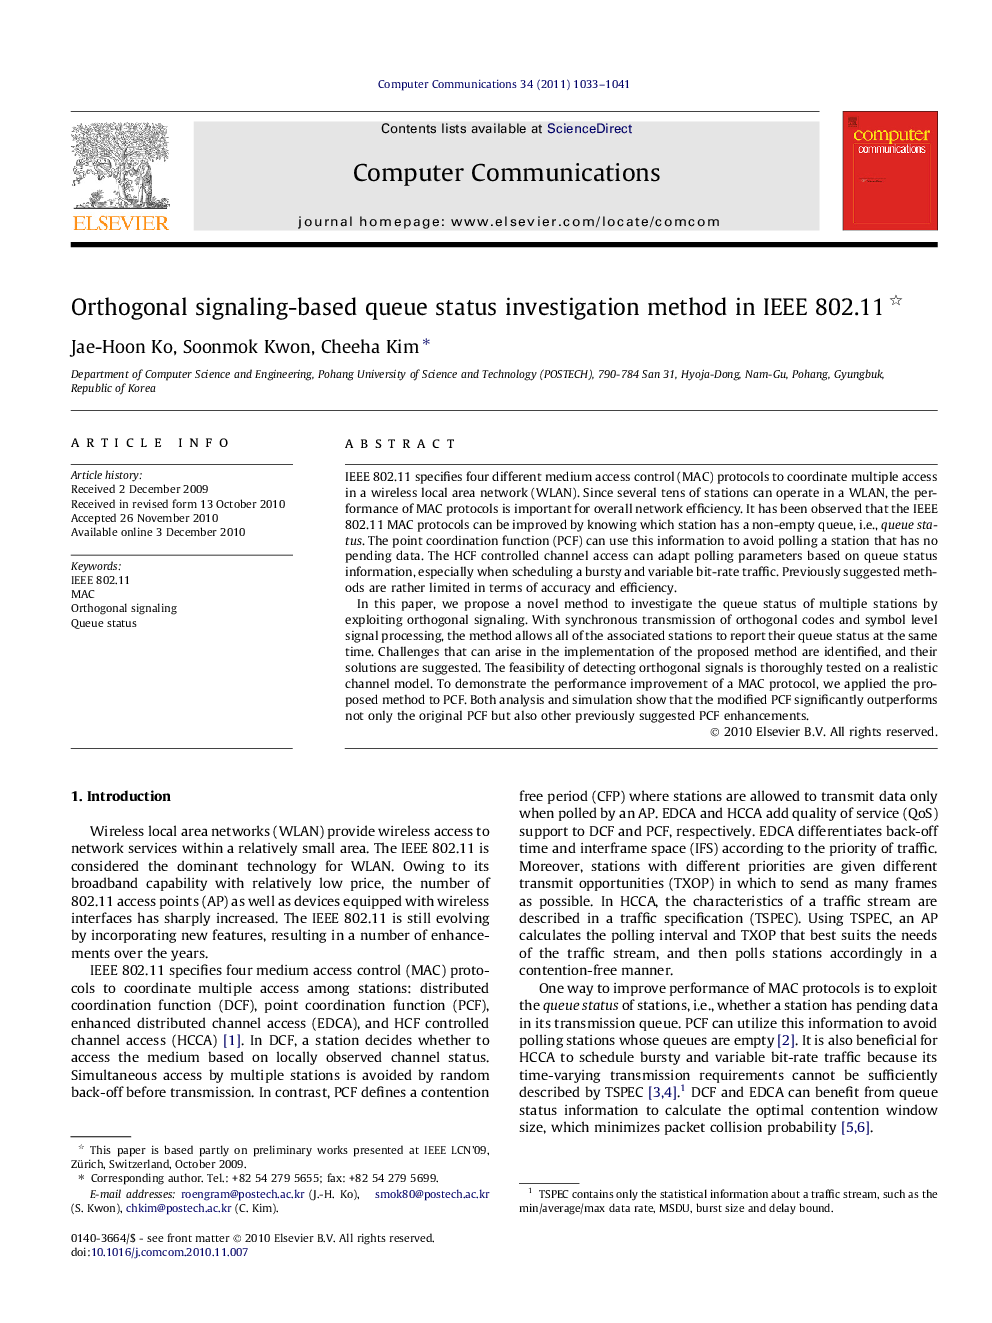 Orthogonal signaling-based queue status investigation method in IEEE 802.11 